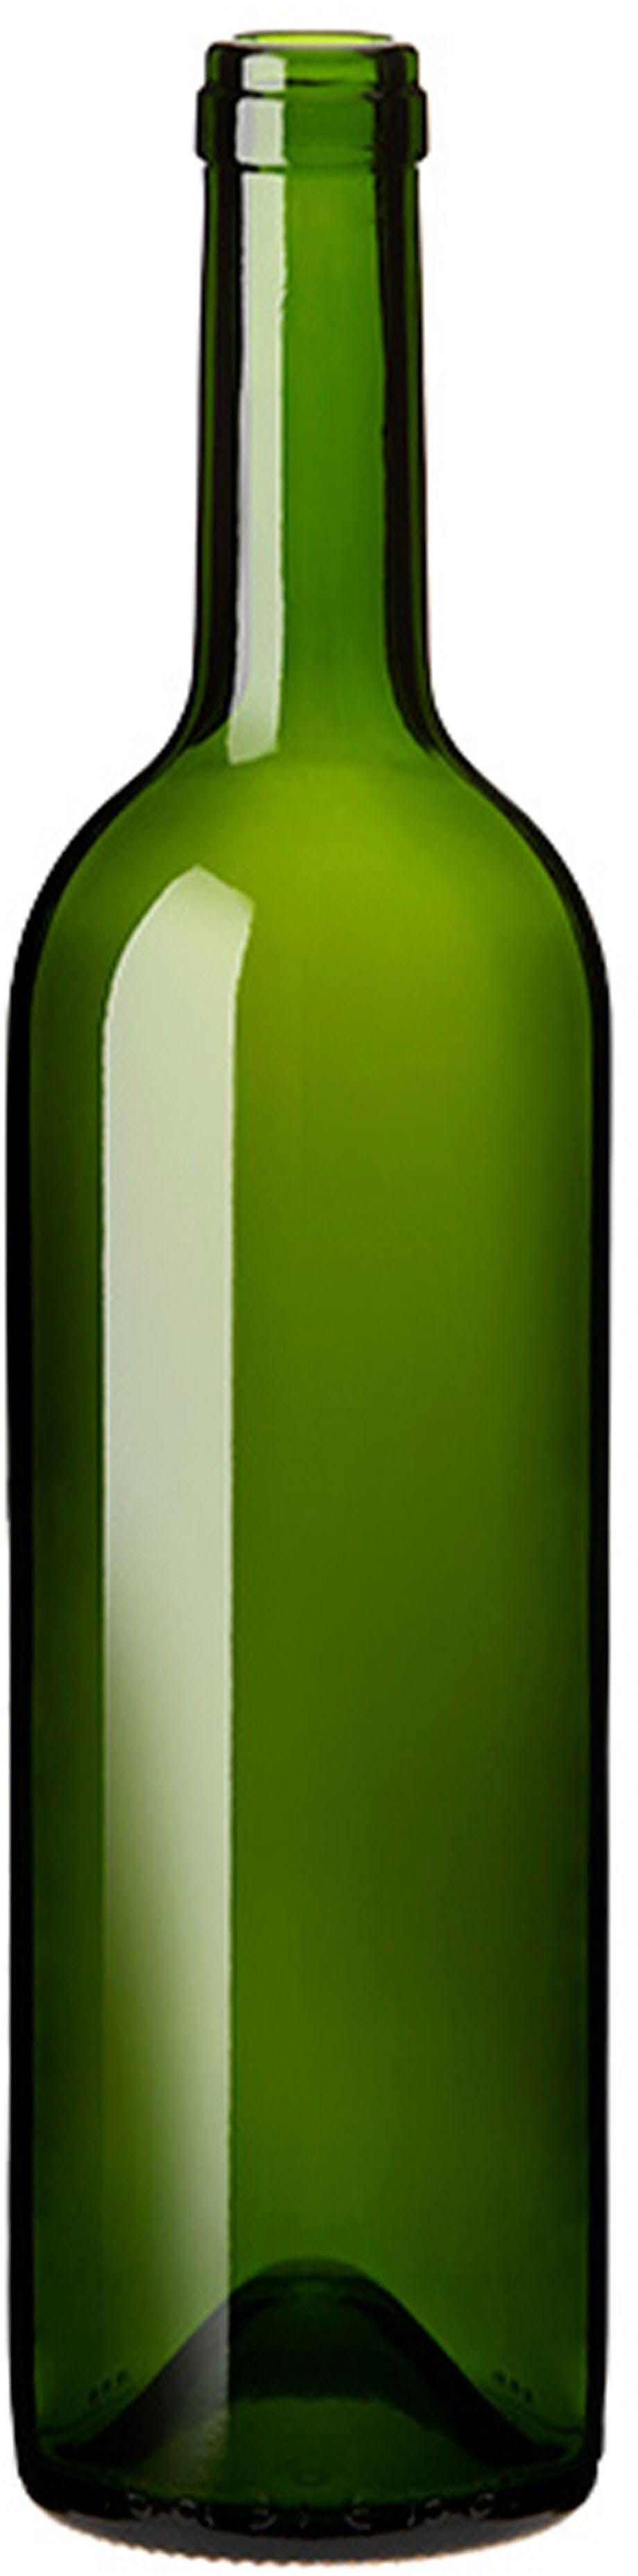 Flasche Bordeaux   SEDUCCION 750 ml BG-Korken